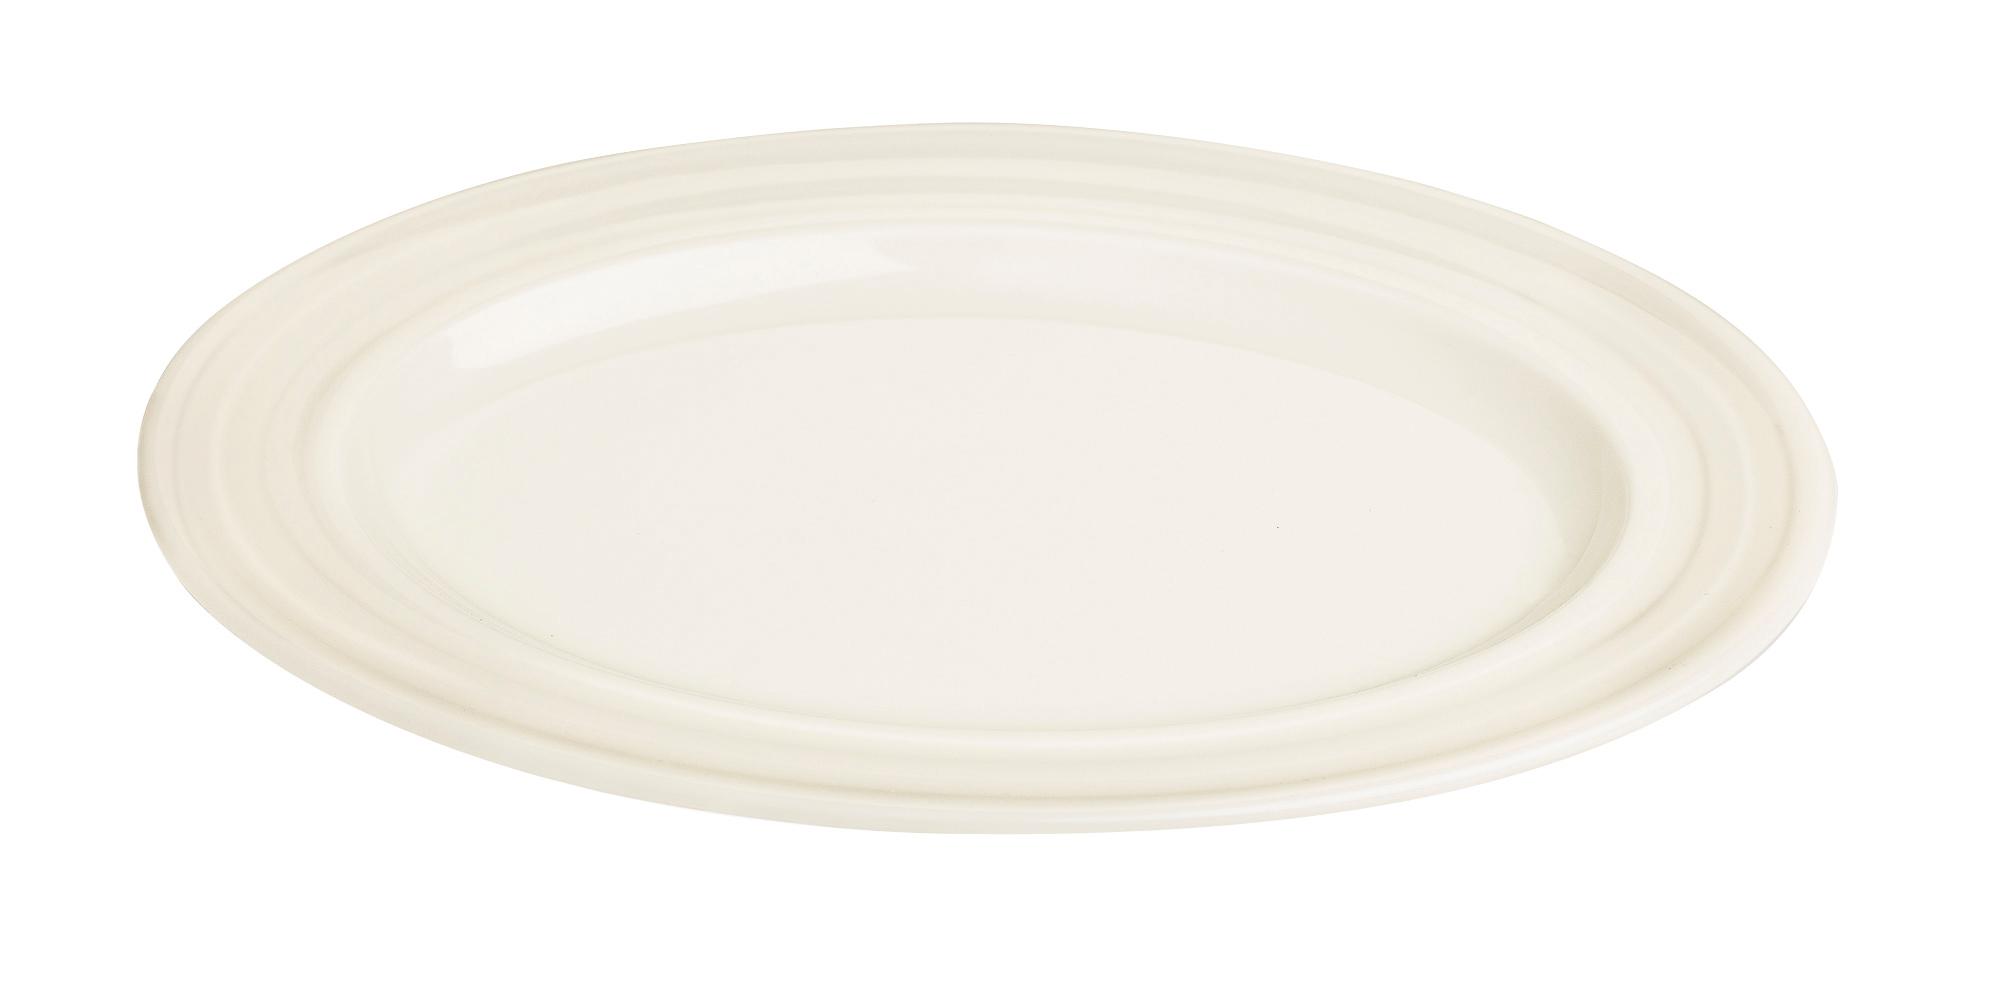 Perla flat plate, 200mm